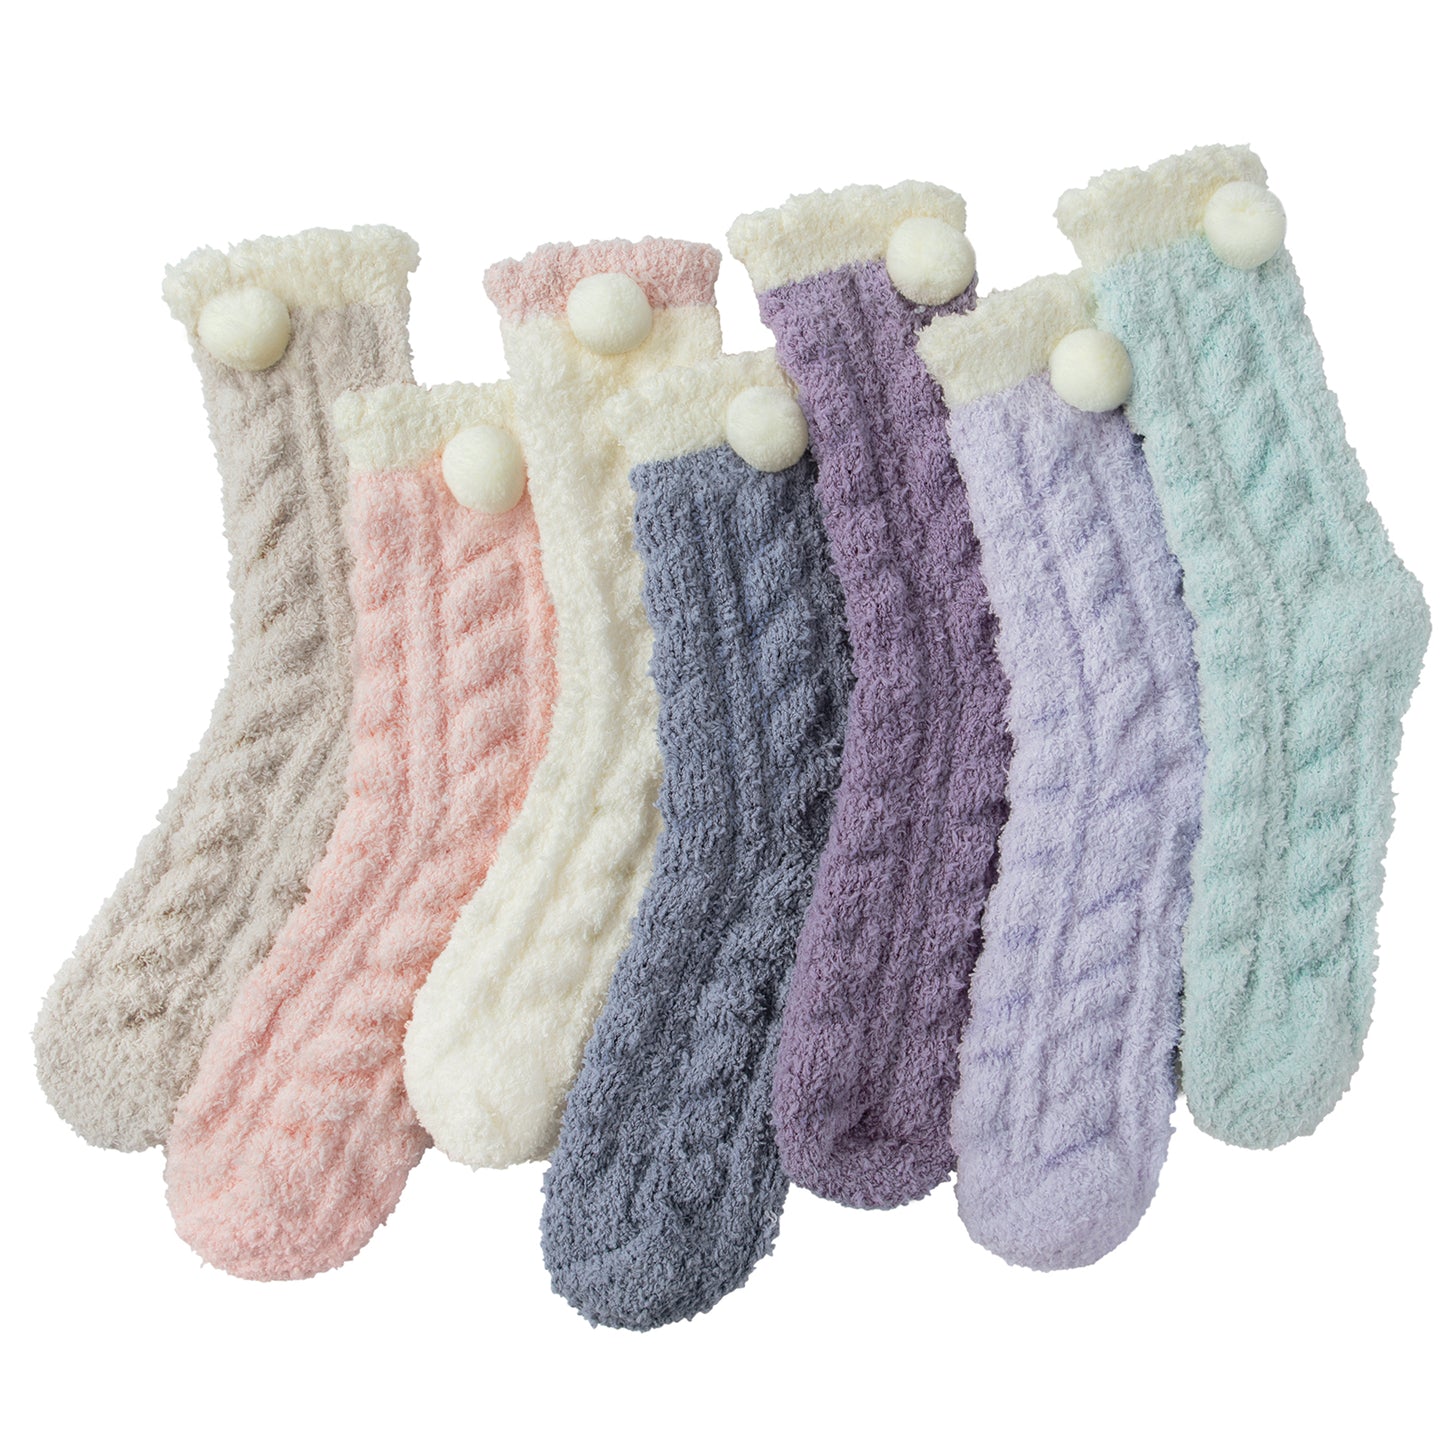 Loritta 7 Pairs Womens Fuzzy Socks Soft Winter Warm Cozy Fluffy Soft Slipper Socks Gifts